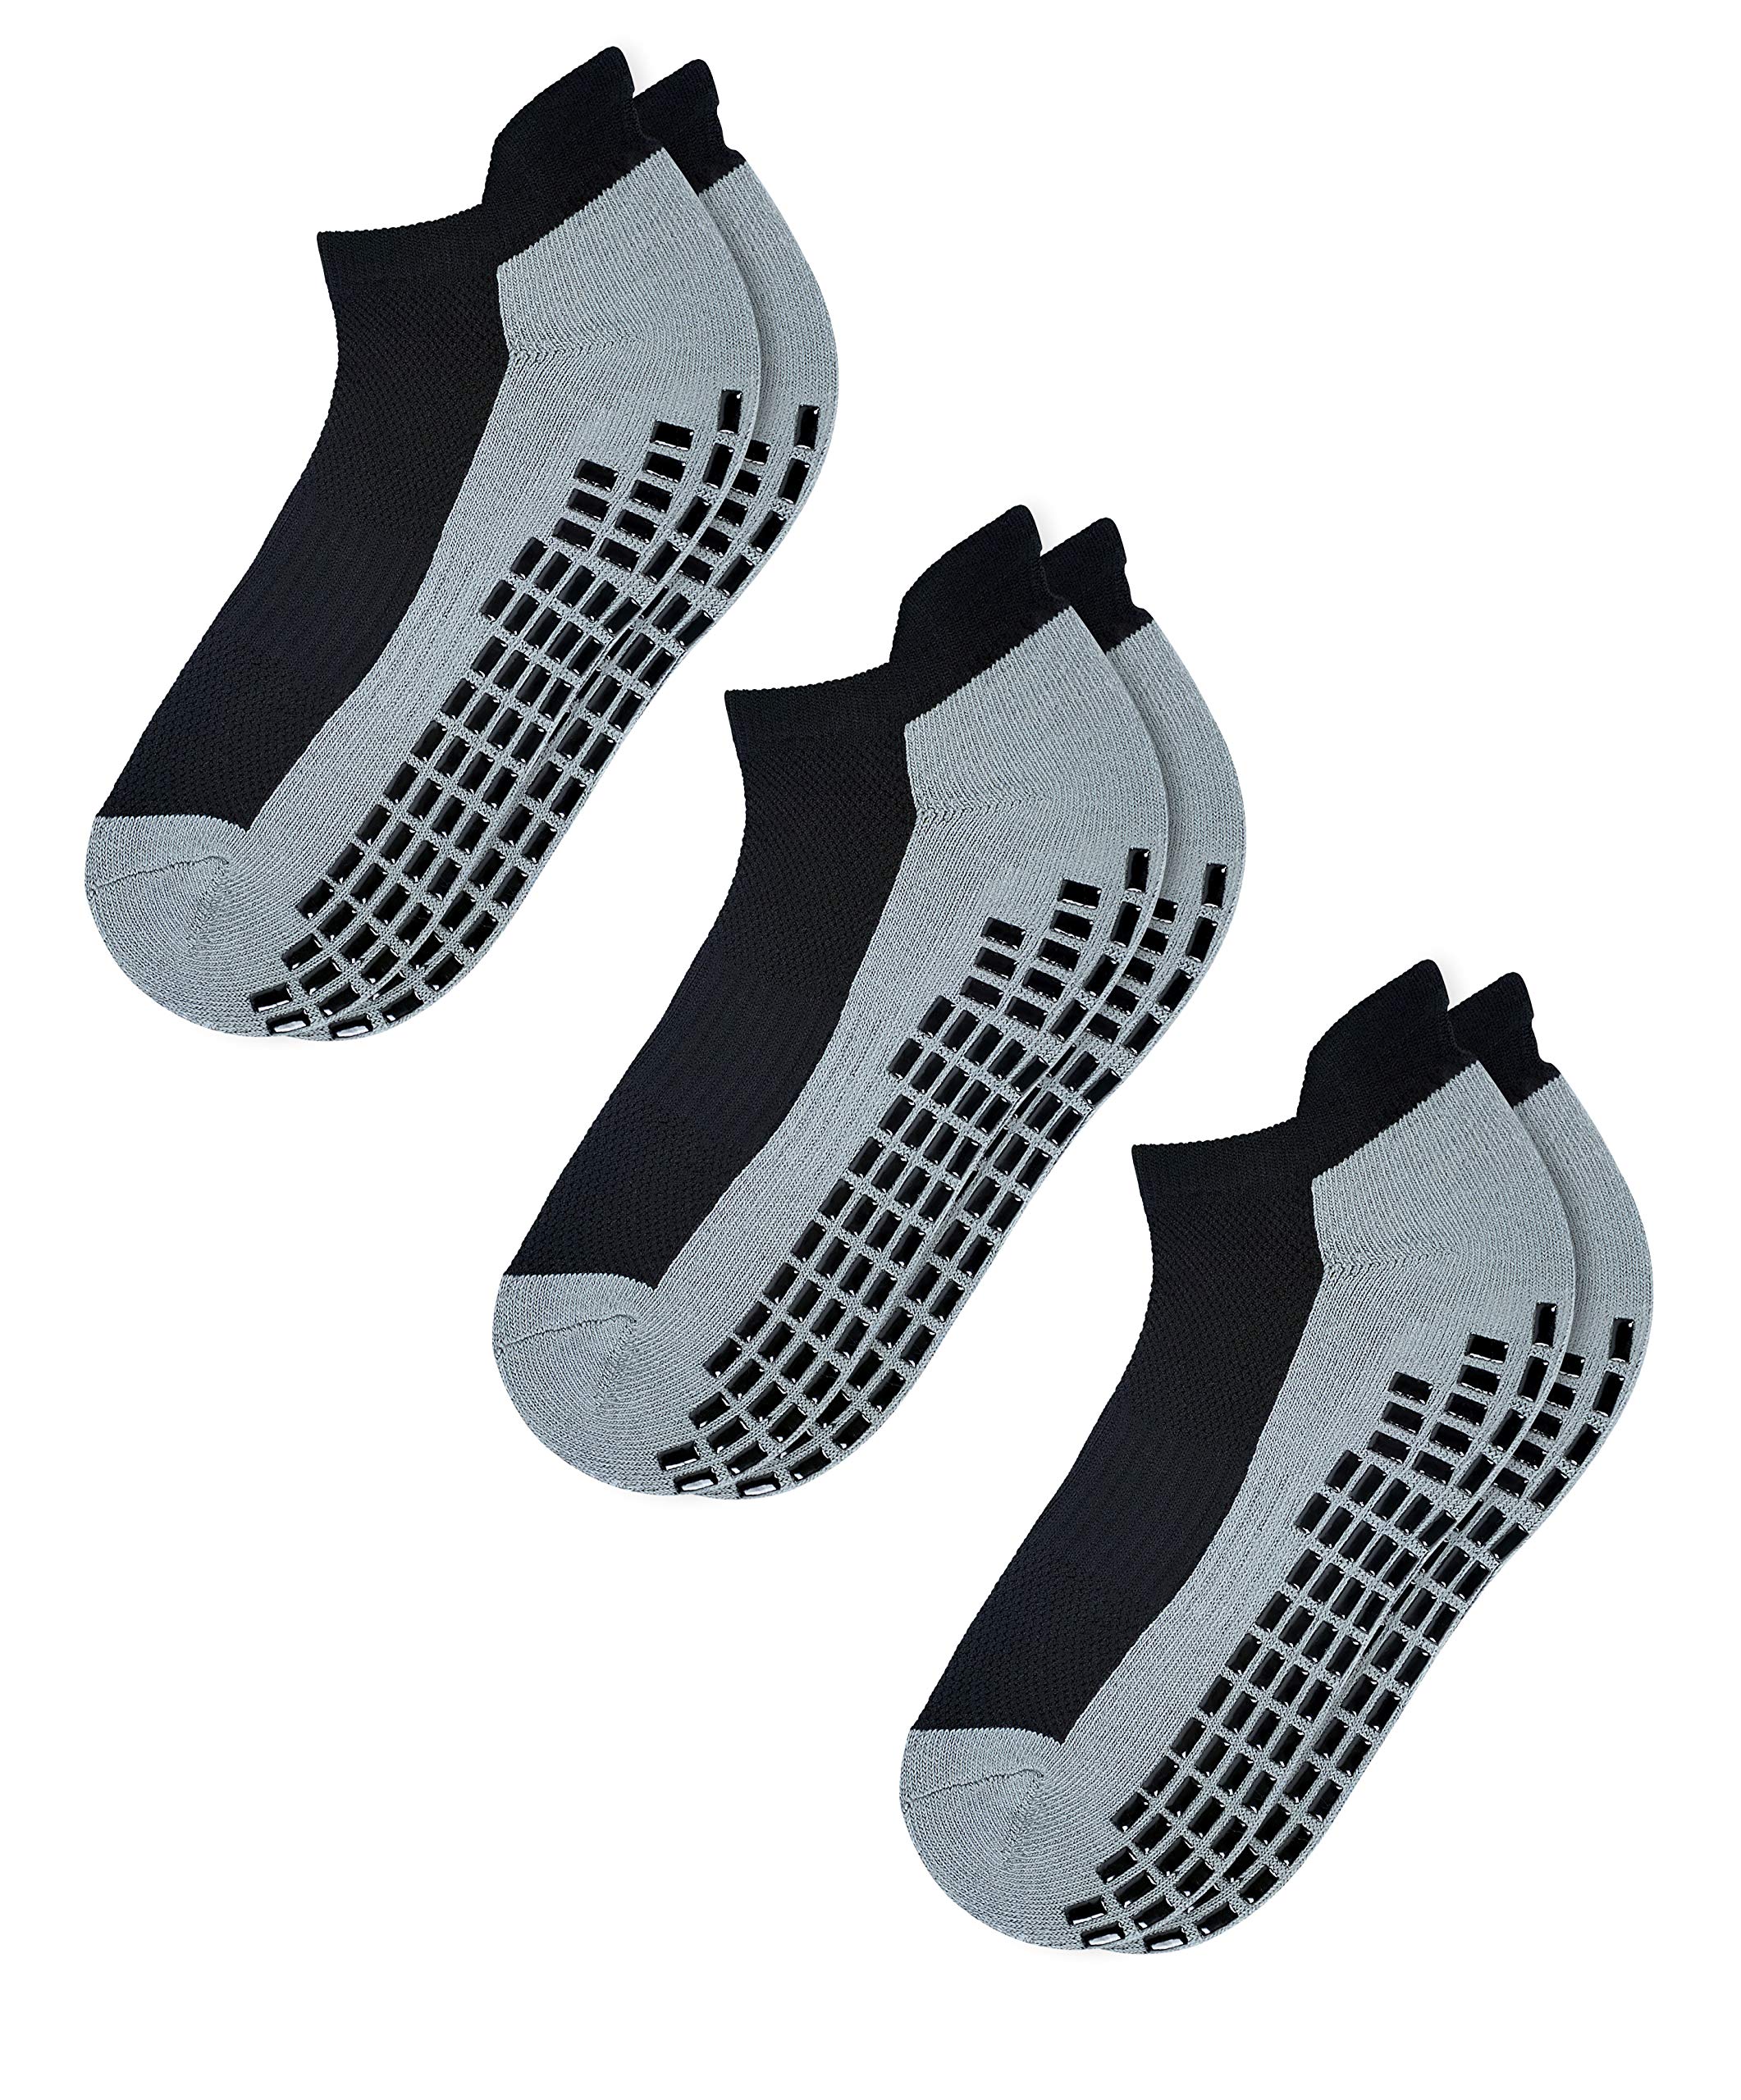 Yoga Socks Super Grips Anti Slip